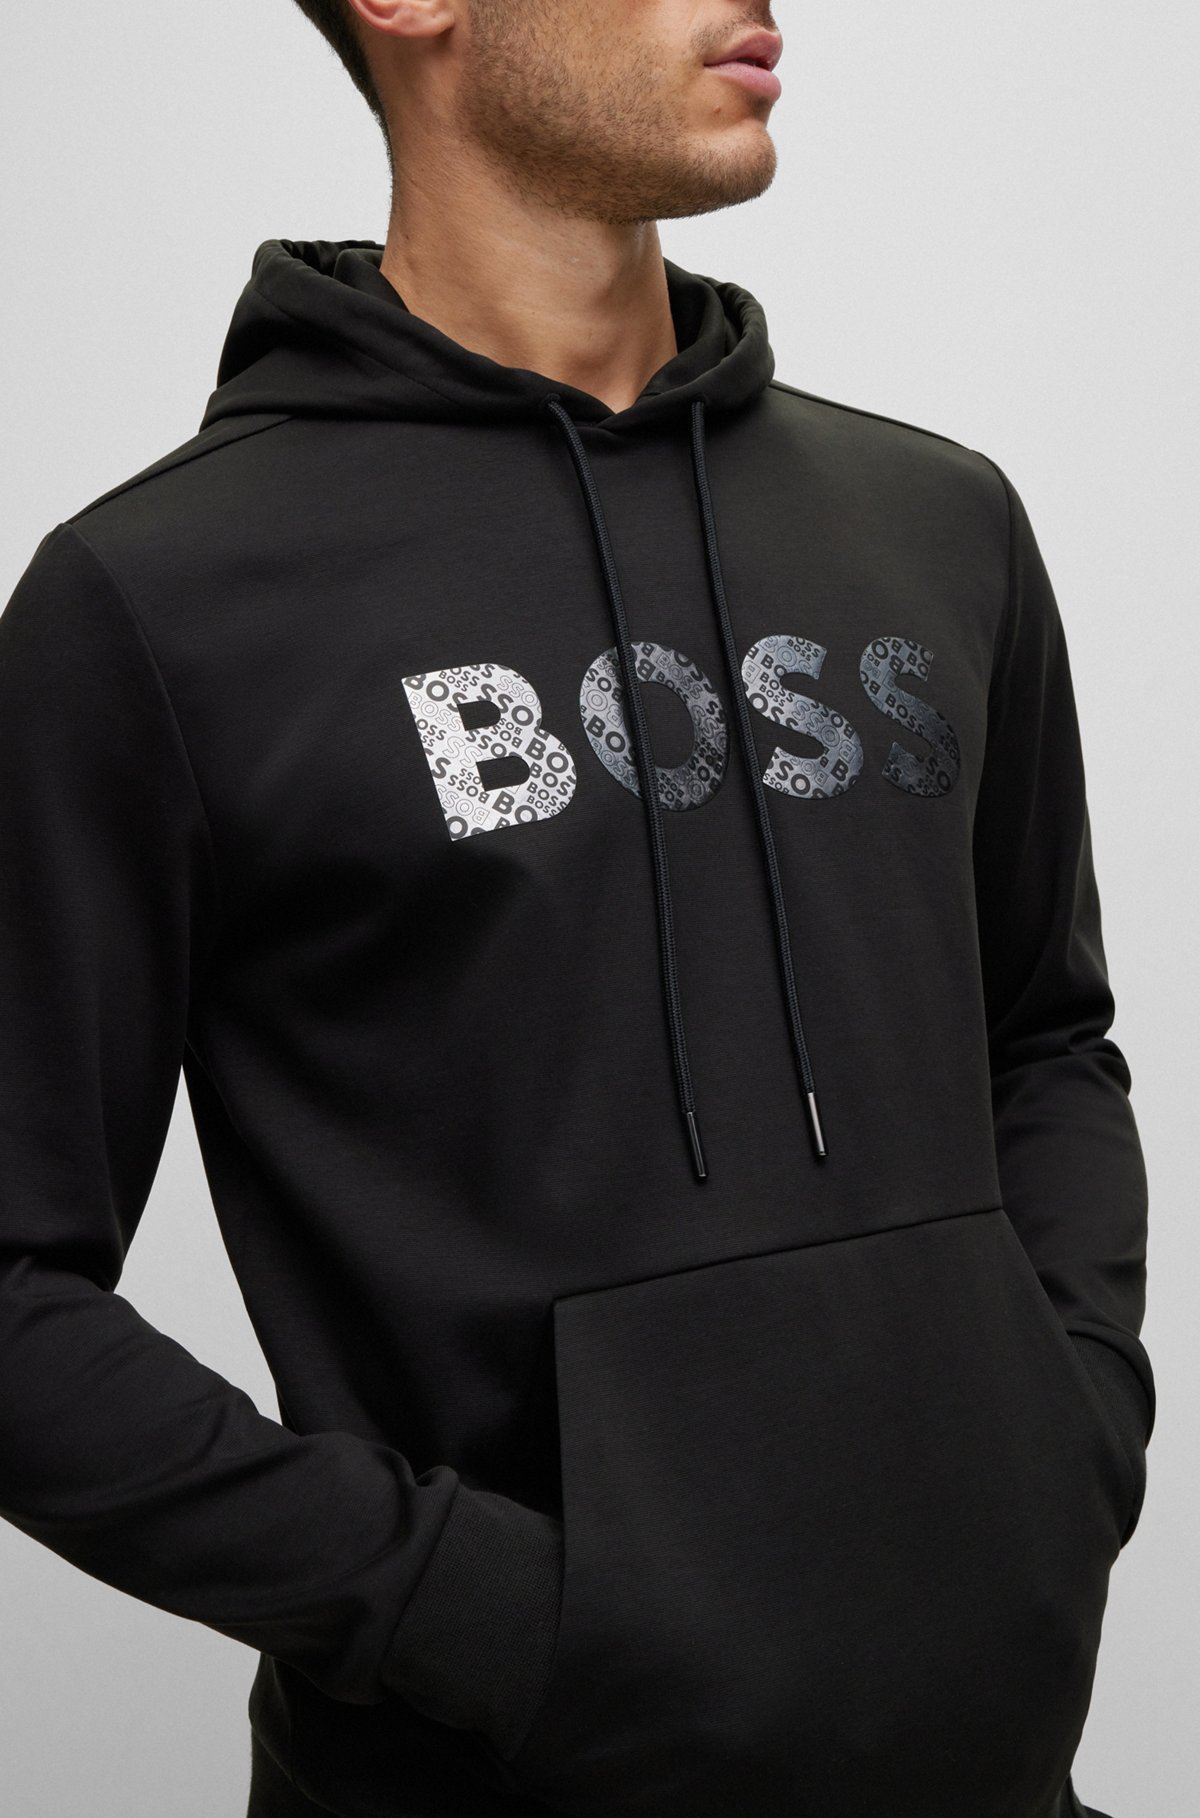 BOSS - Cotton-blend hoodie with mirror-effect logo artwork